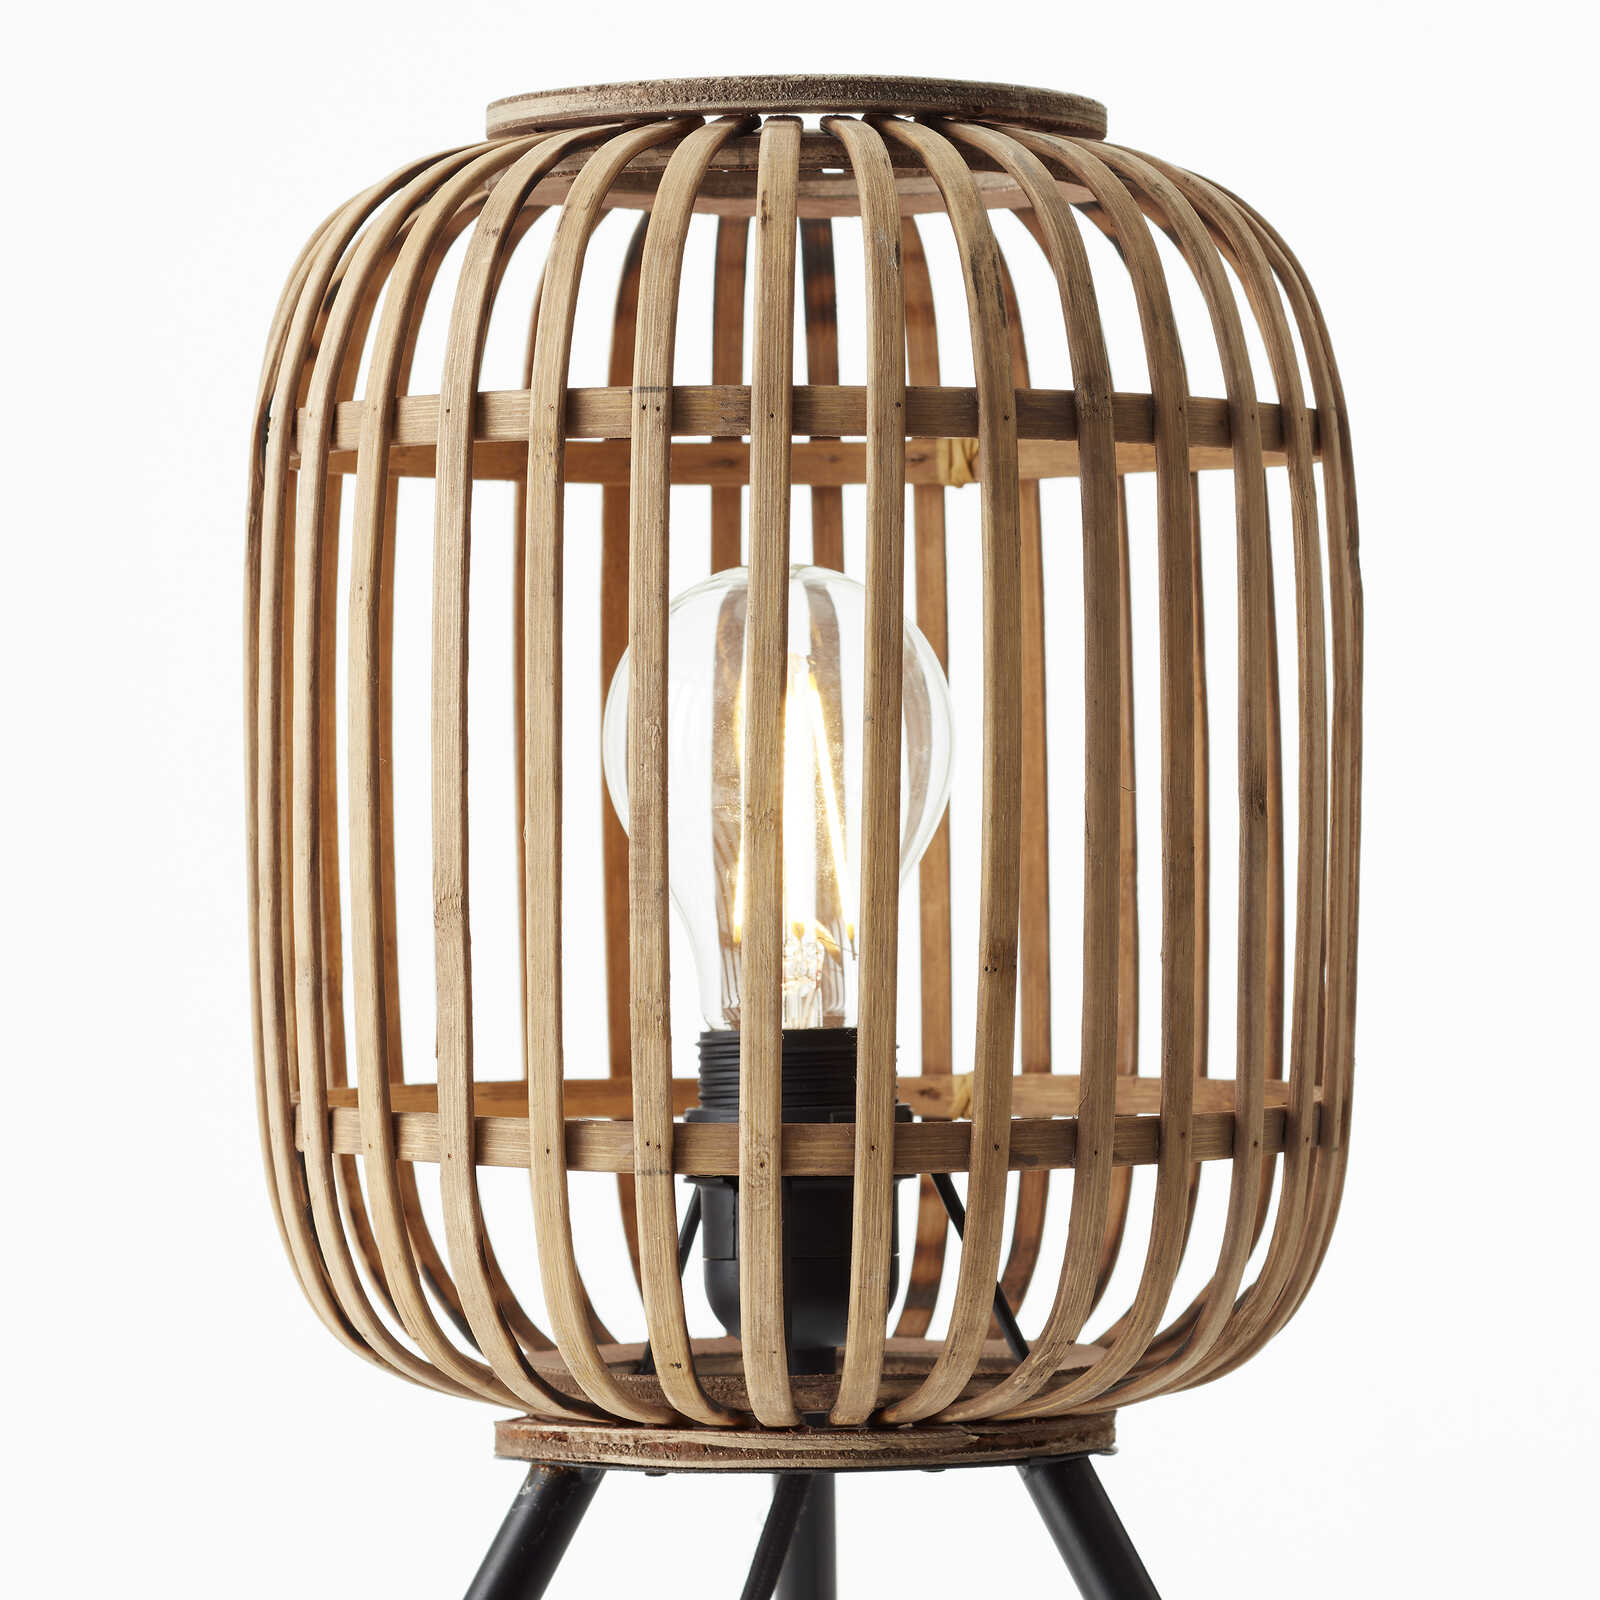             Lampe de table en bambou - Willi 2 - Marron
        